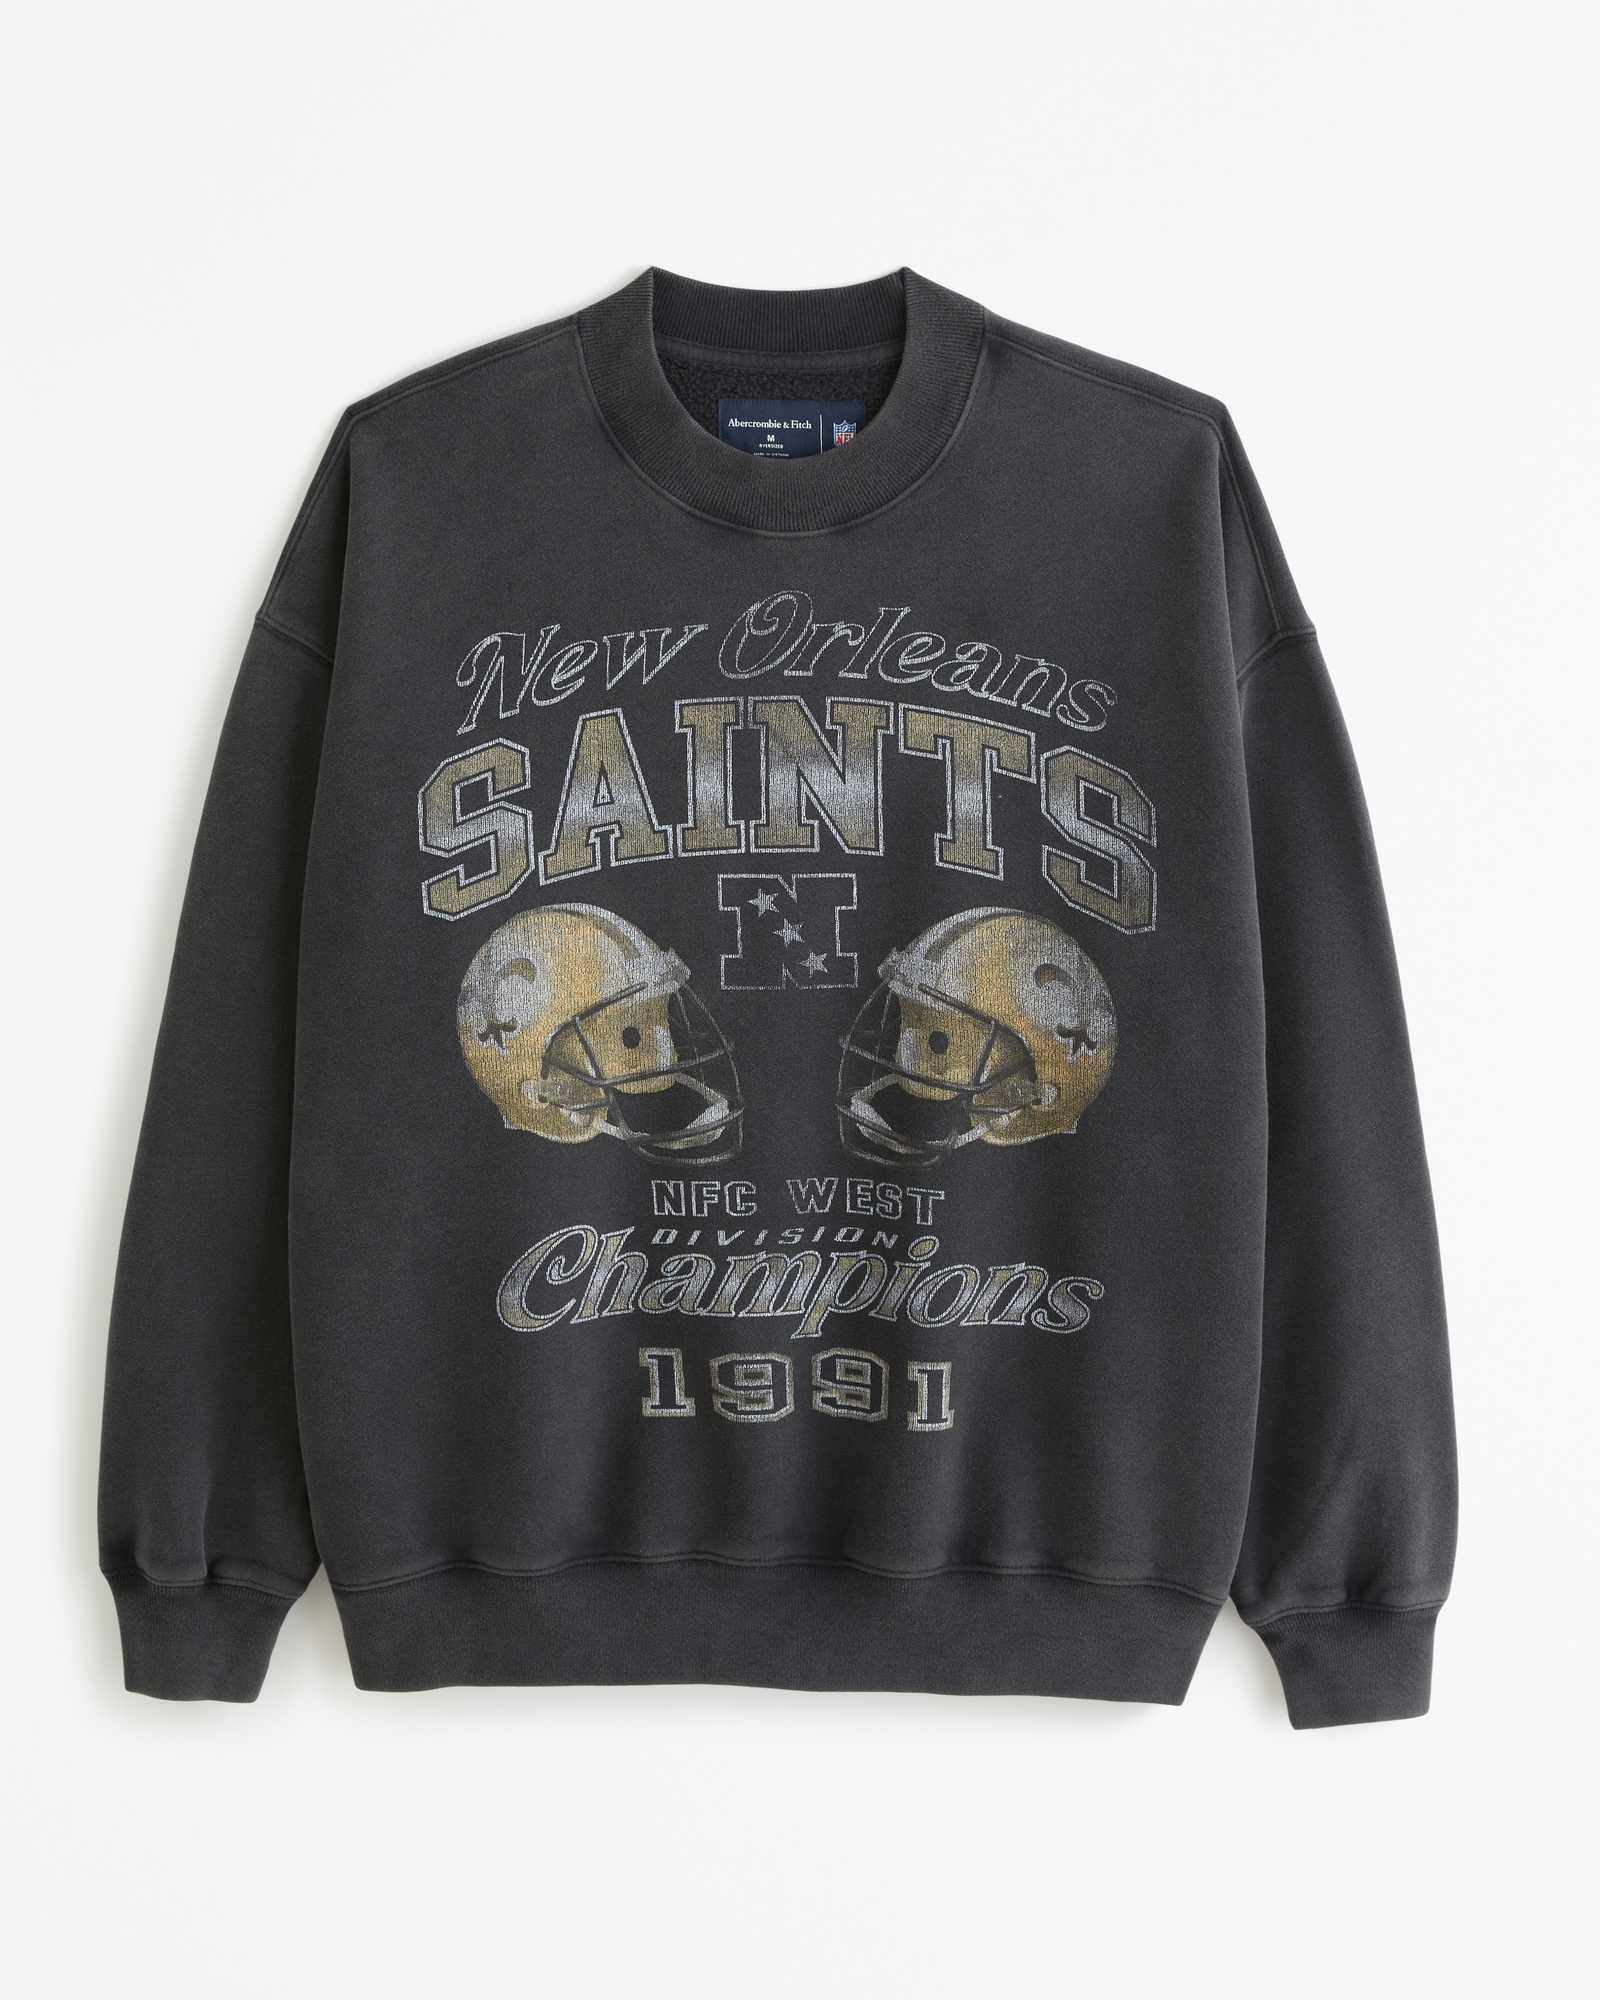 Buy NFC West Champions LA Rams Shirt For Free Shipping CUSTOM XMAS PRODUCT  COMPANY